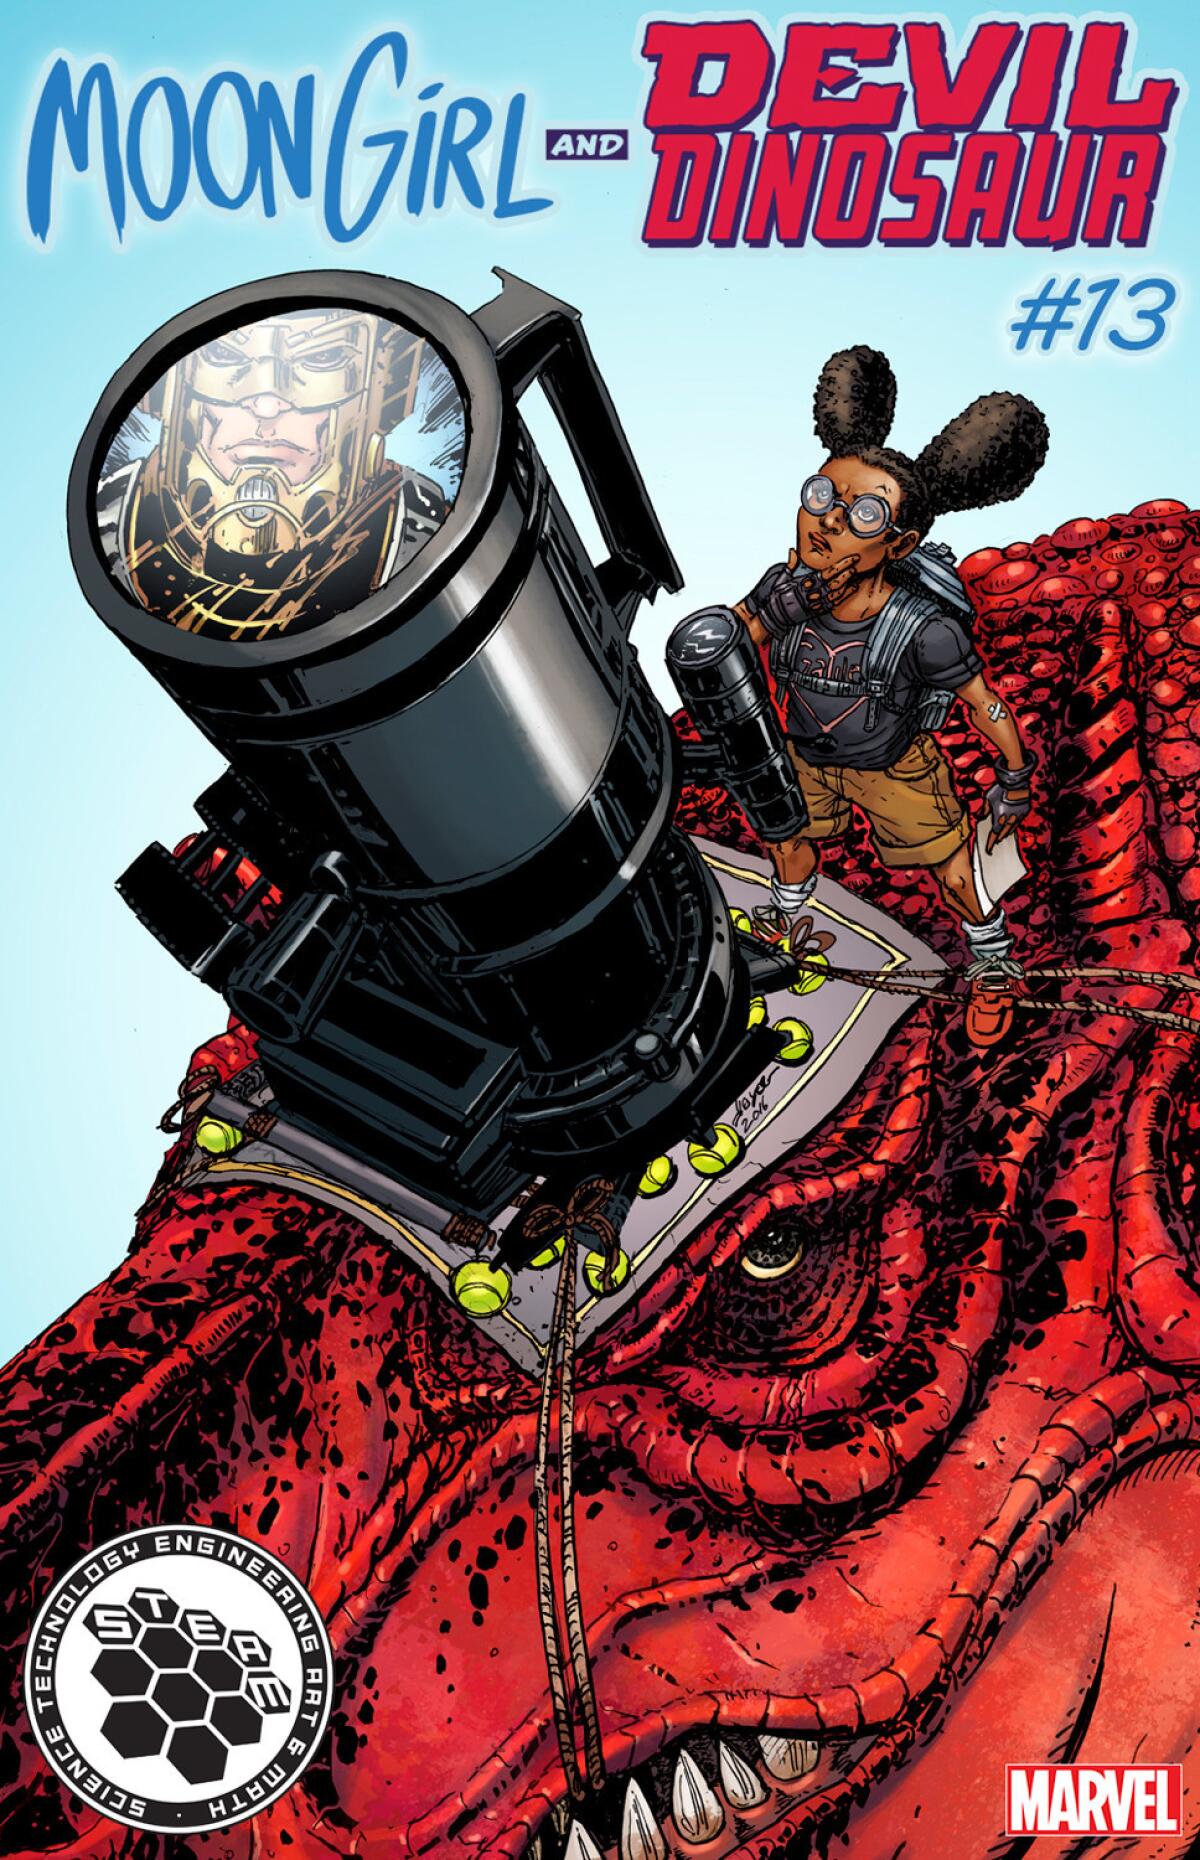 "Moon Girl & Devil Dinosaur" No. 13 STEAM variant cover (science) by Joyce Chin. (Marvel)